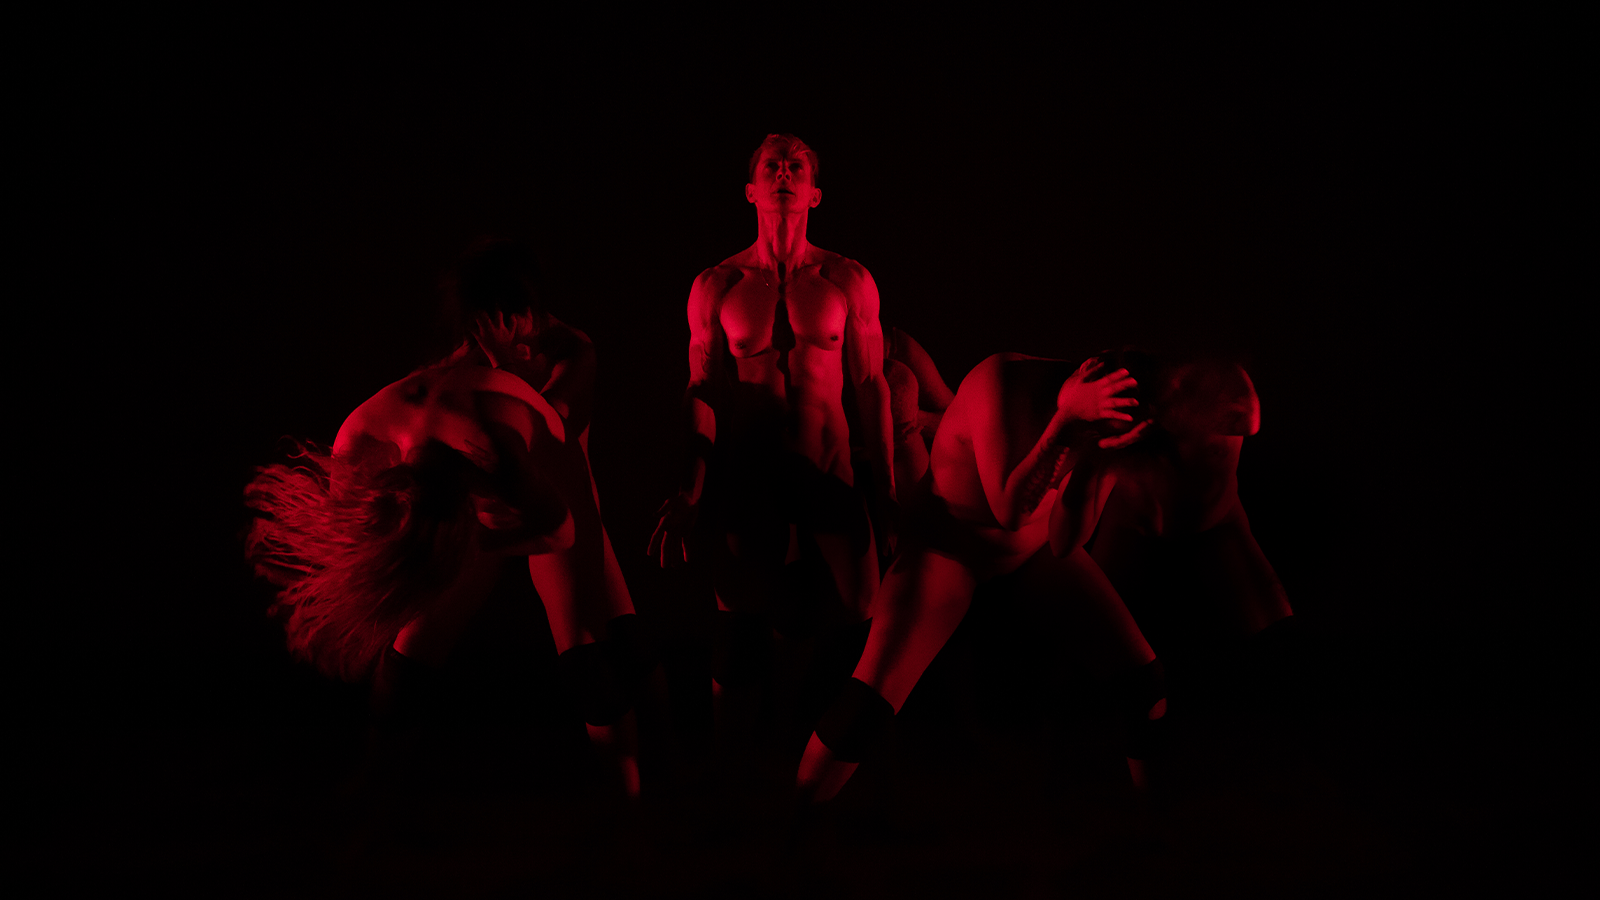 Dancers on stage in a dark space under red neon lights 